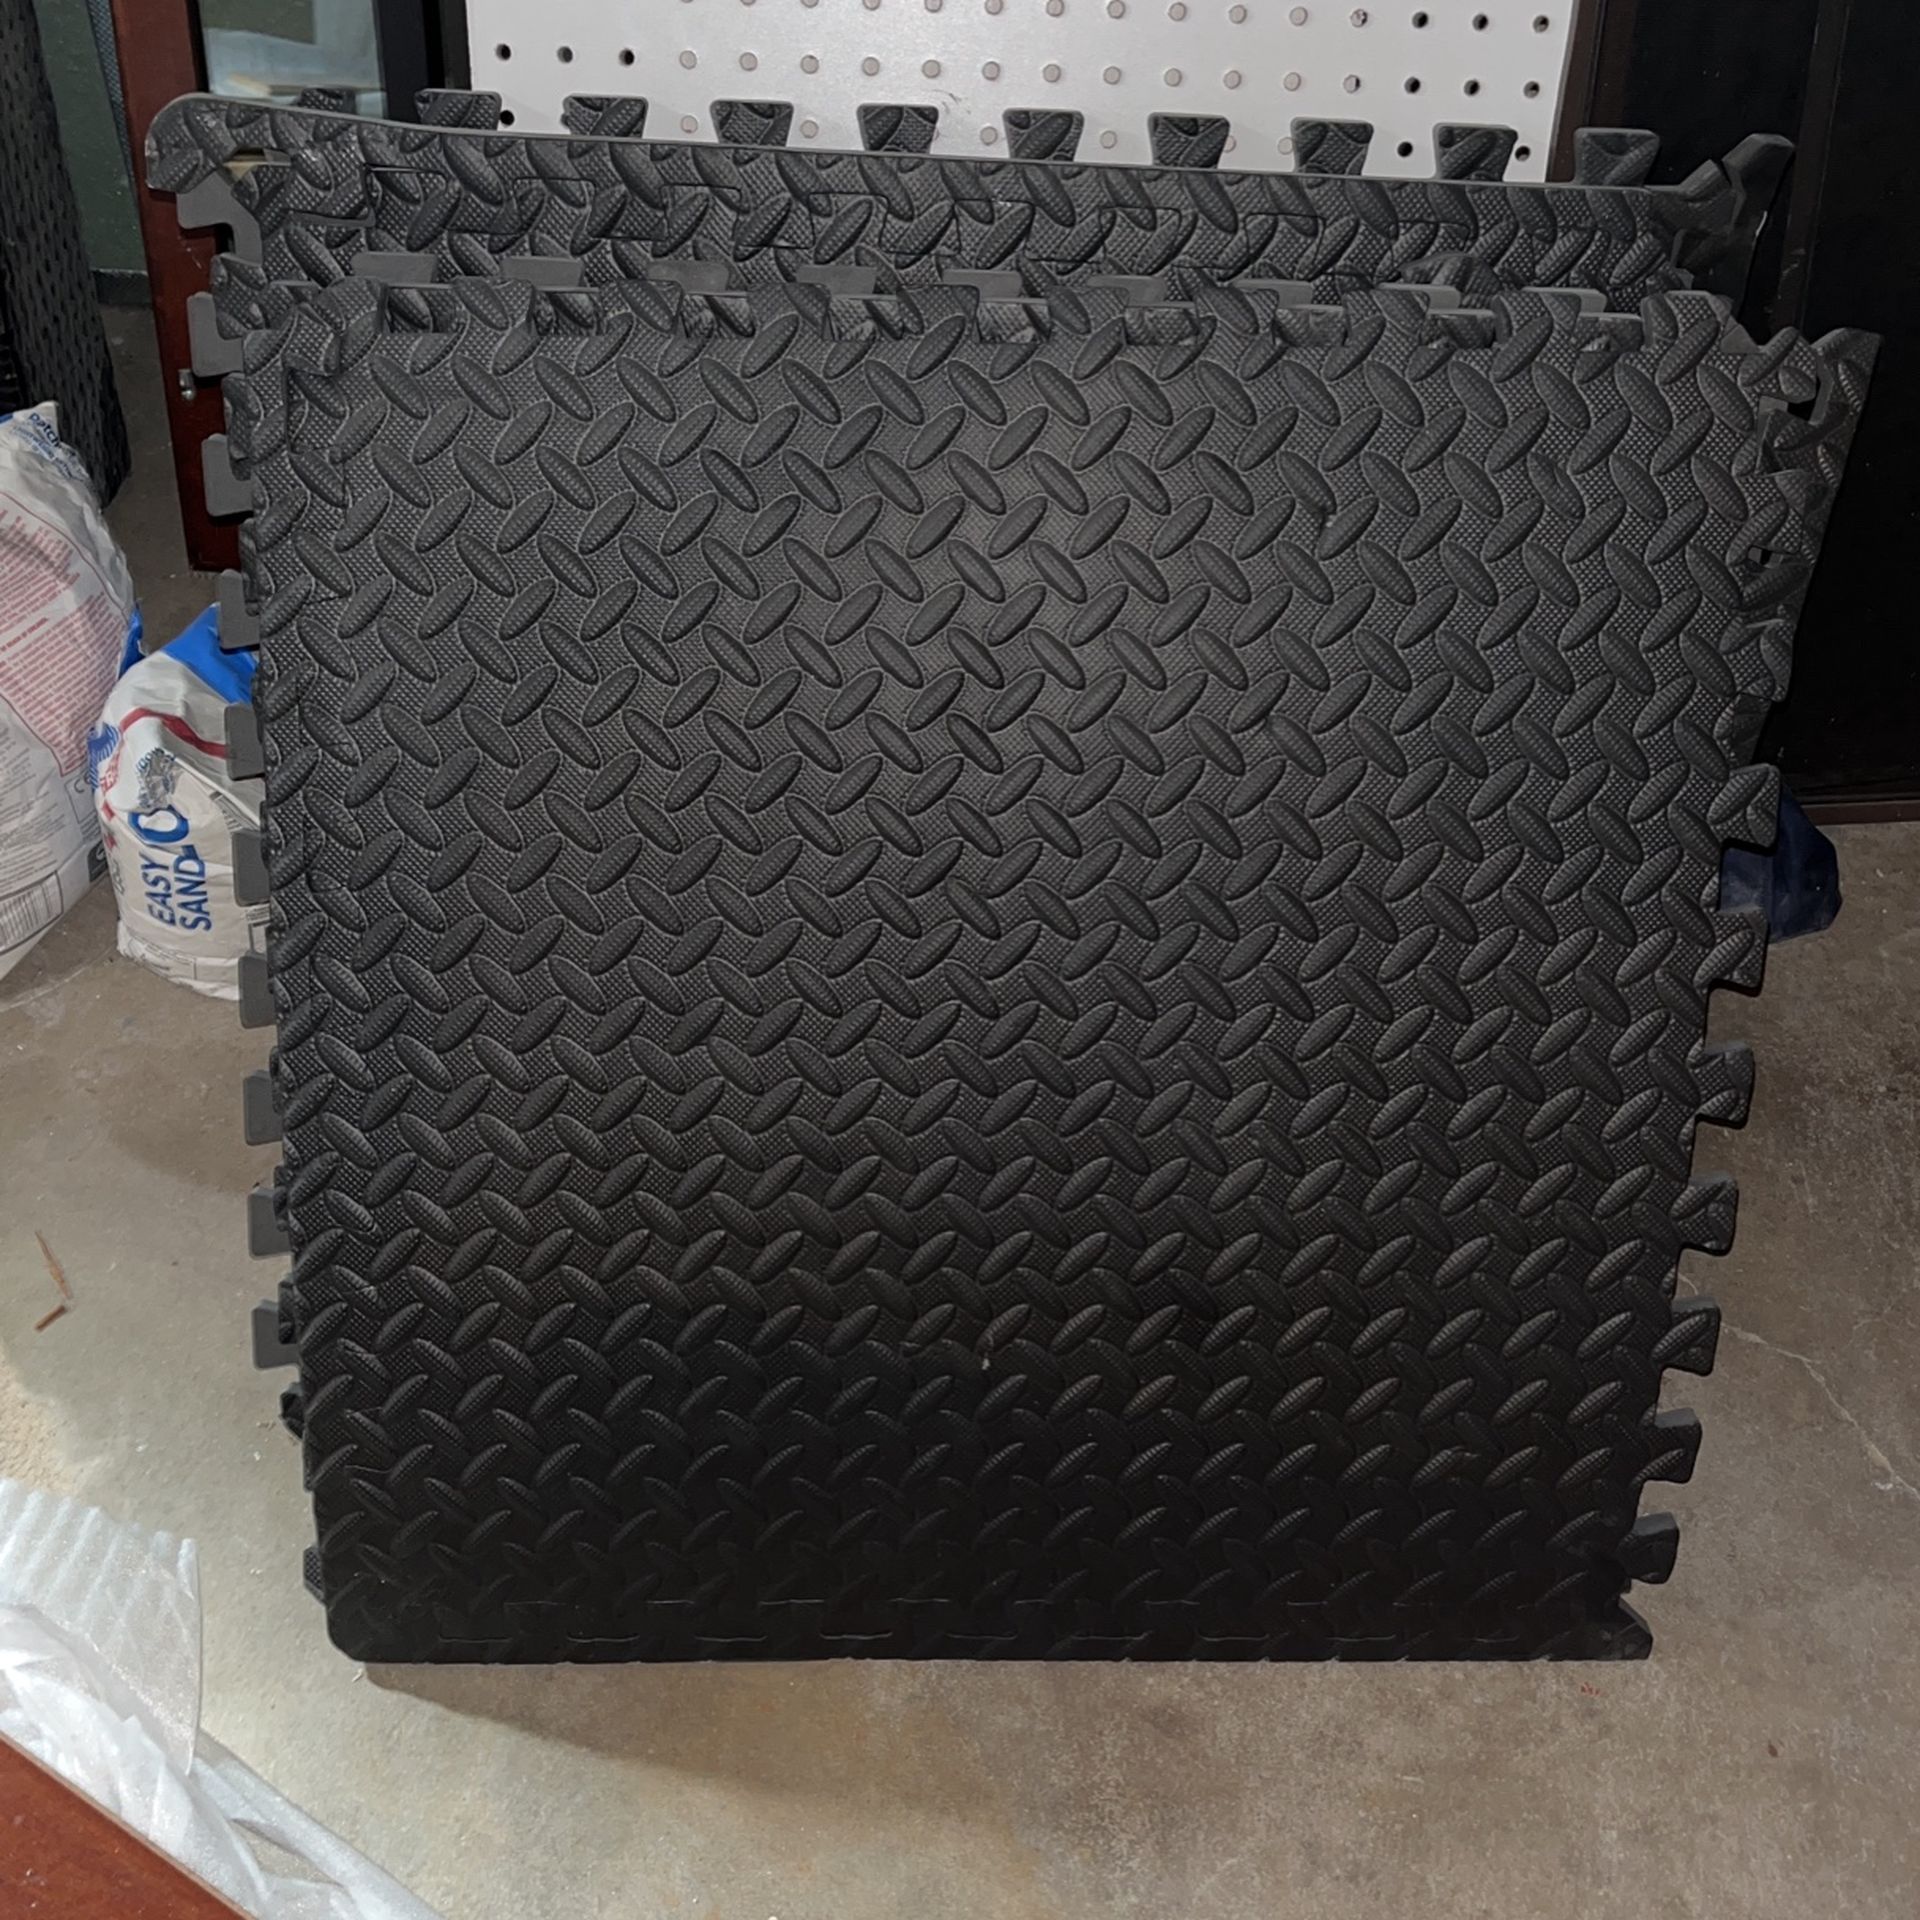 Free Interlocking Foam Floor Tiles for Gym - 24.7 x 24.7 x .5 Inches